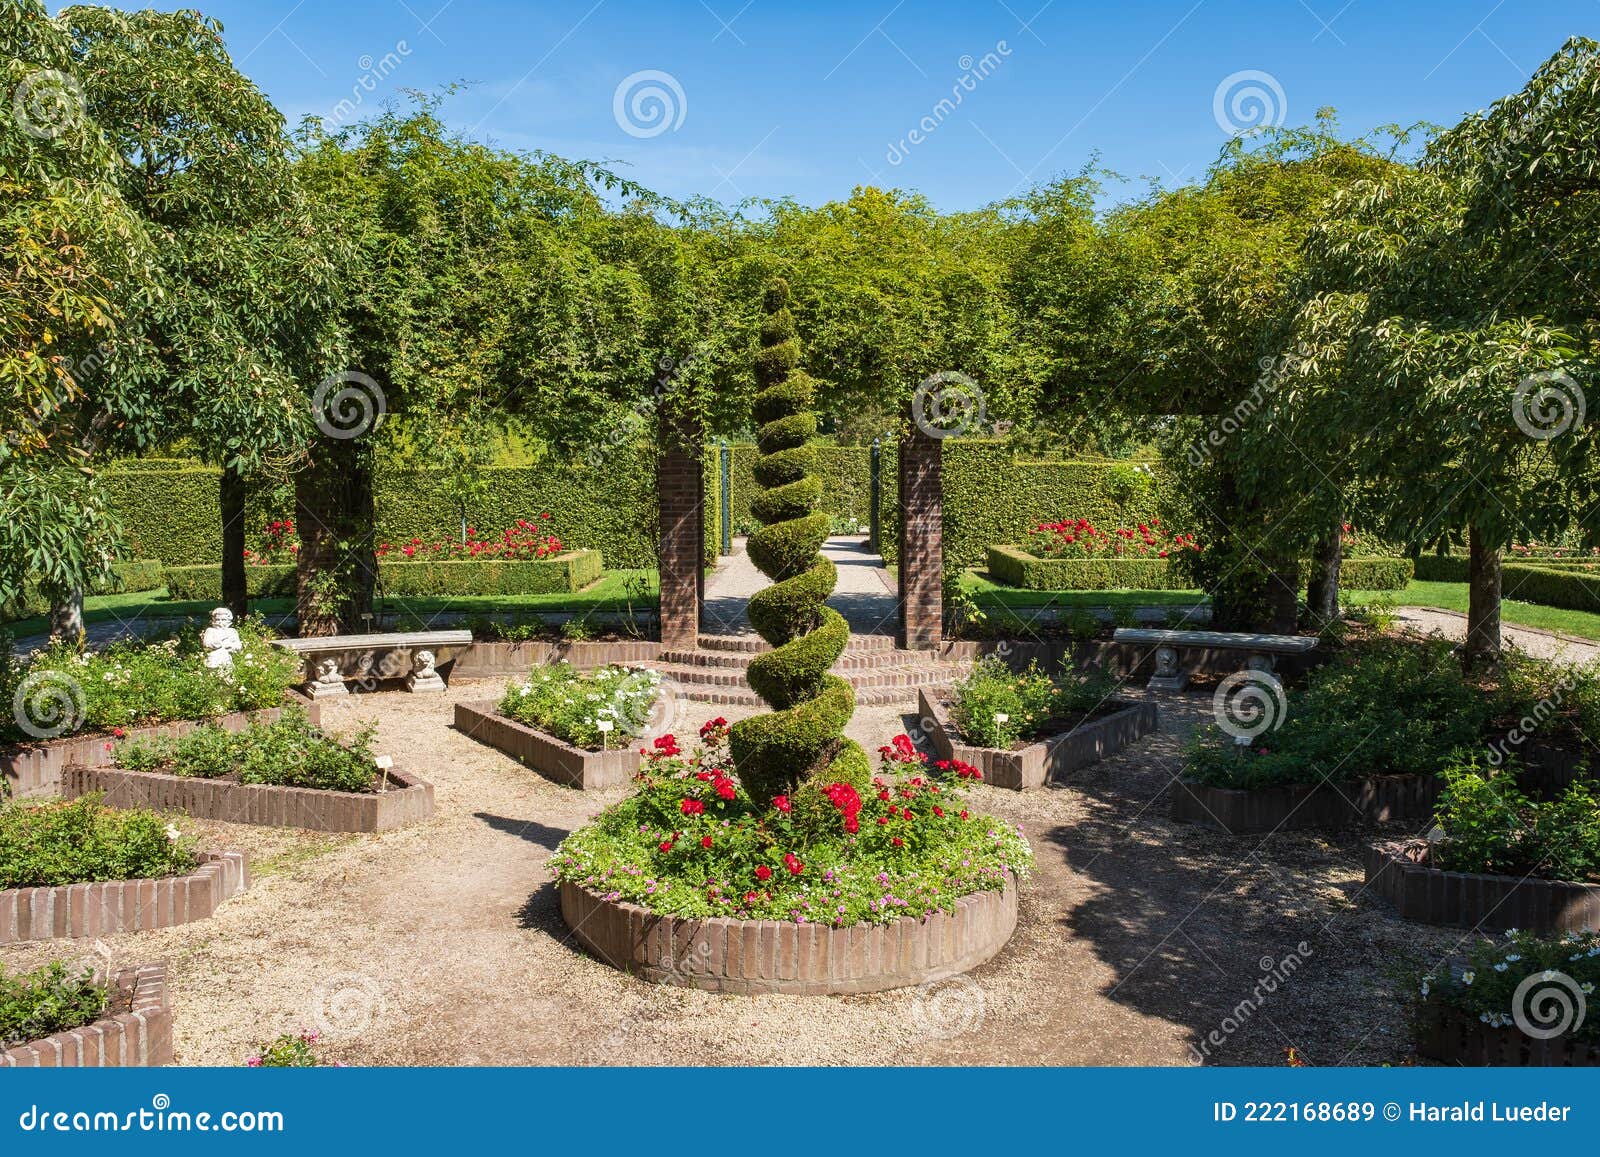 Park in Arcen / Netherlands Stock Image - Image of flowering ...